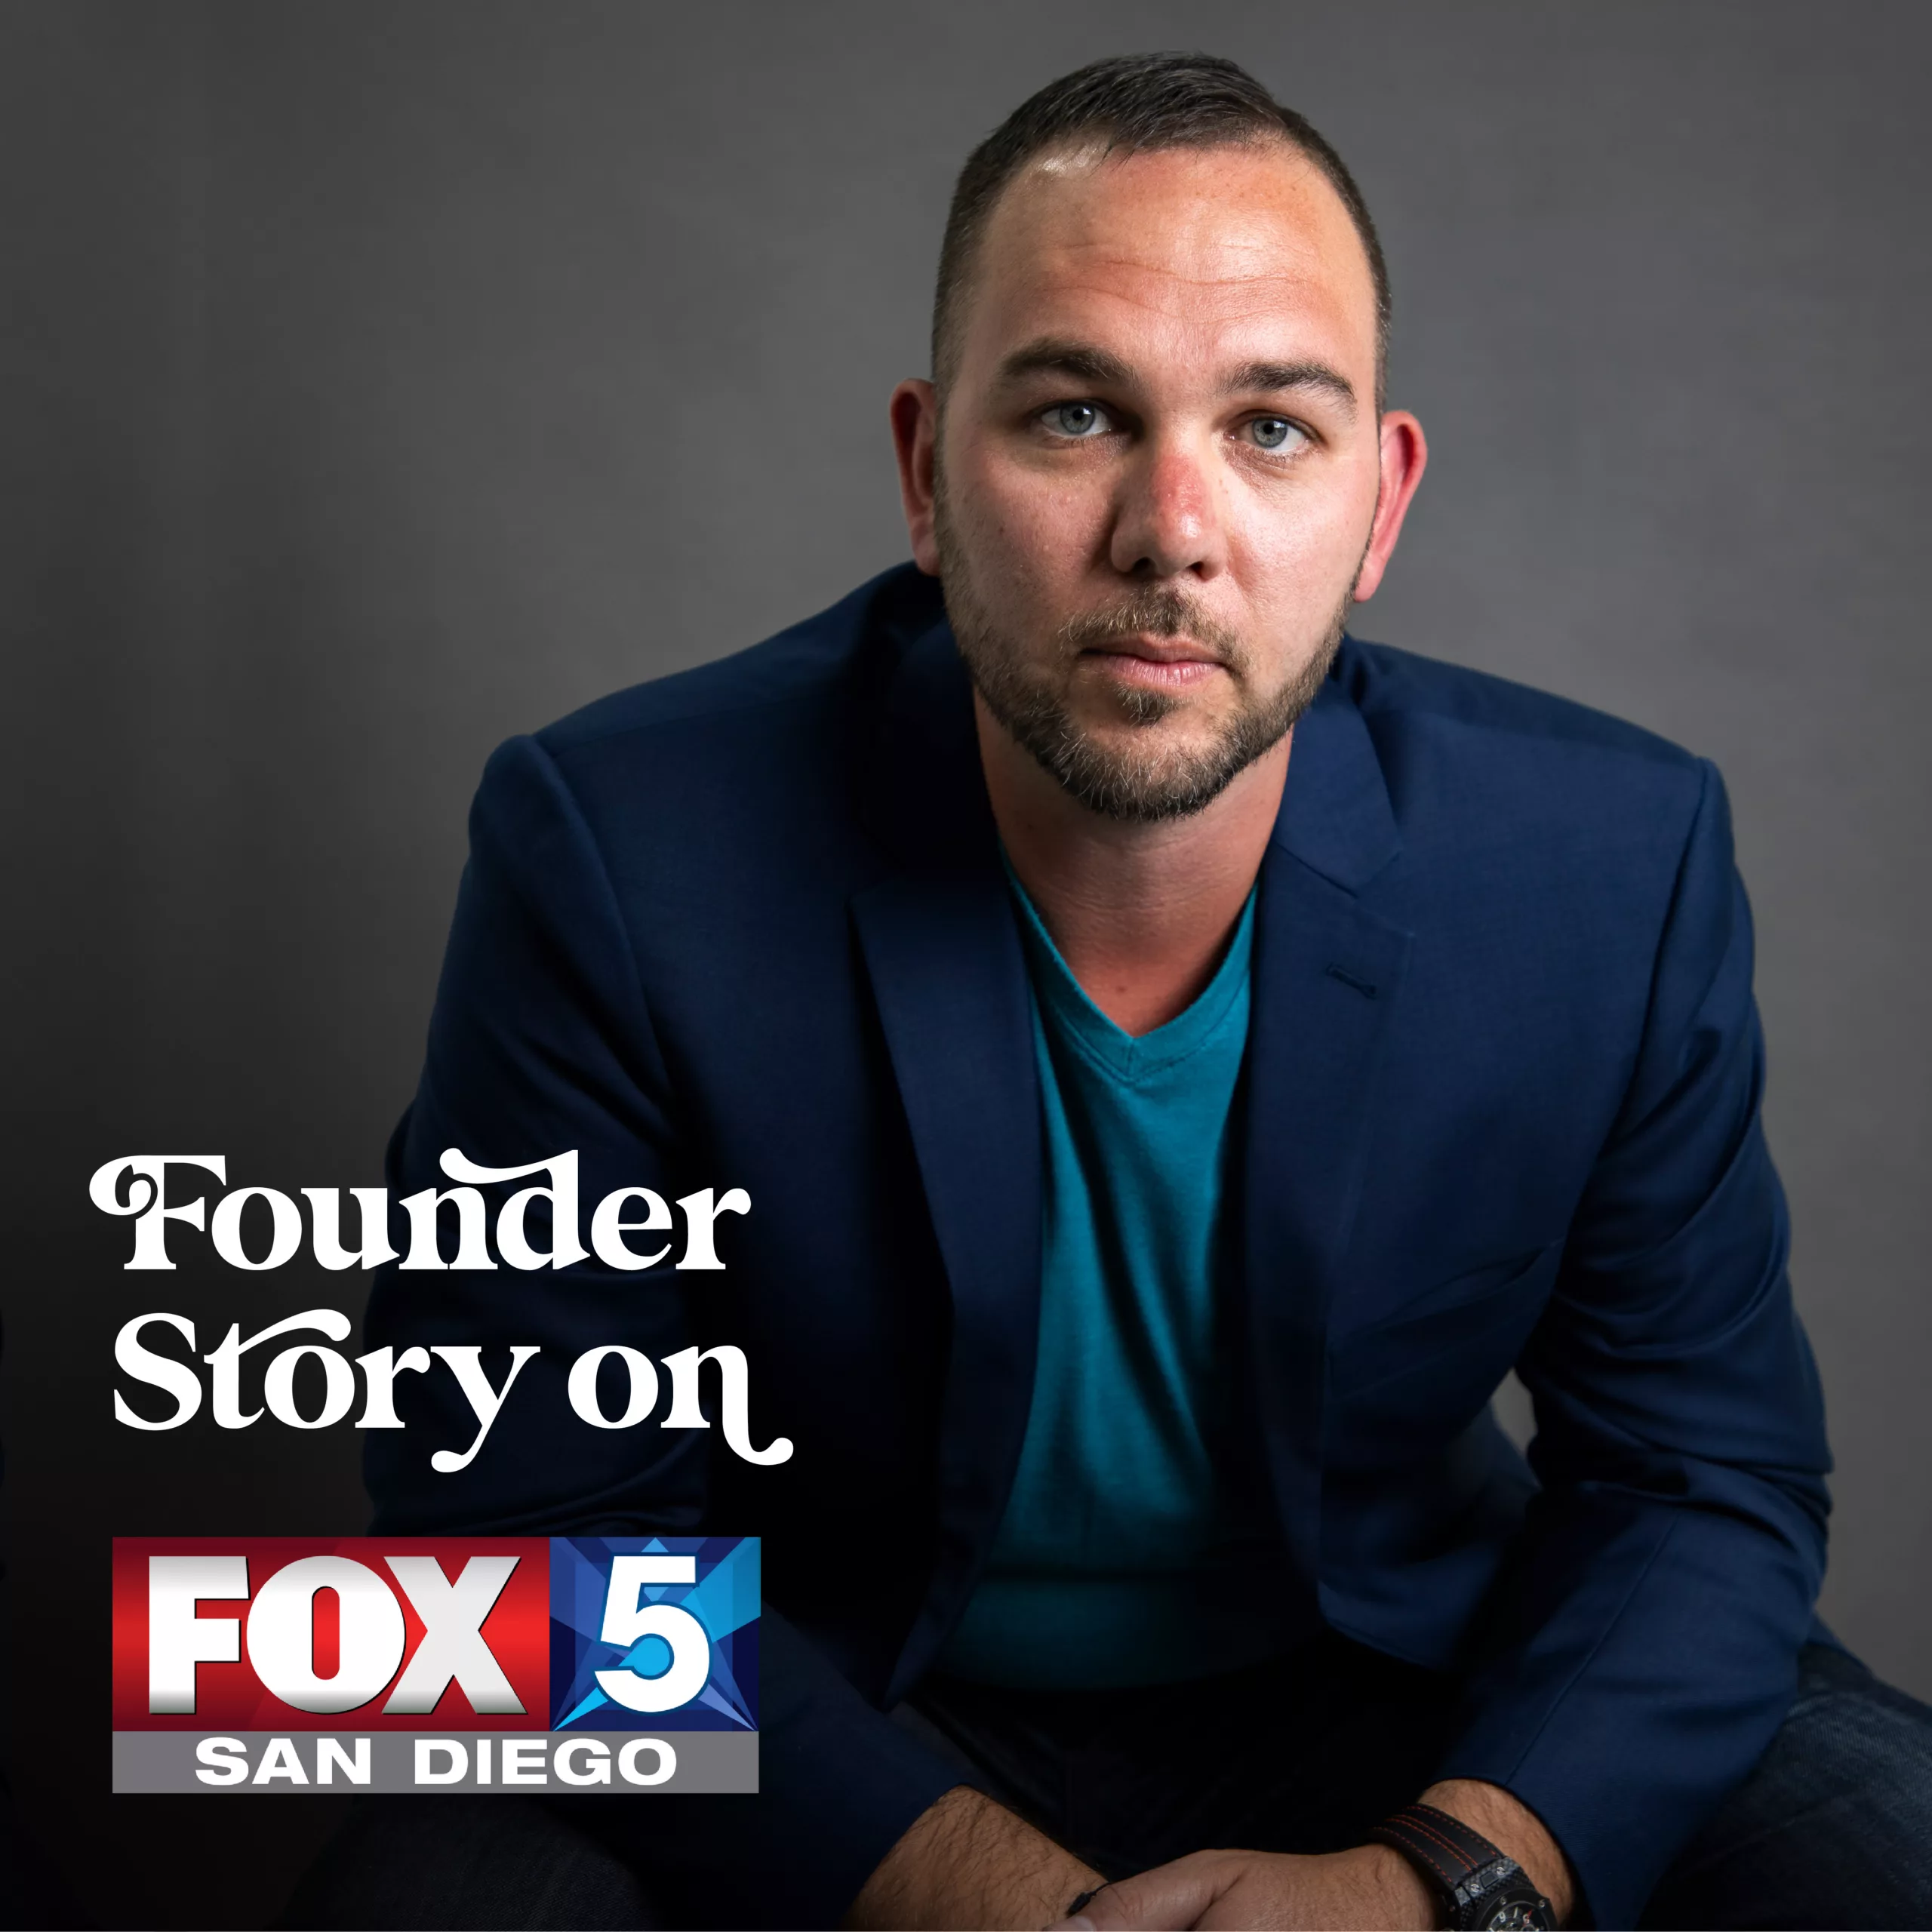 Adam Kroener, CEO of Carbliss regarding Founder Story on Fox 5 San Diego